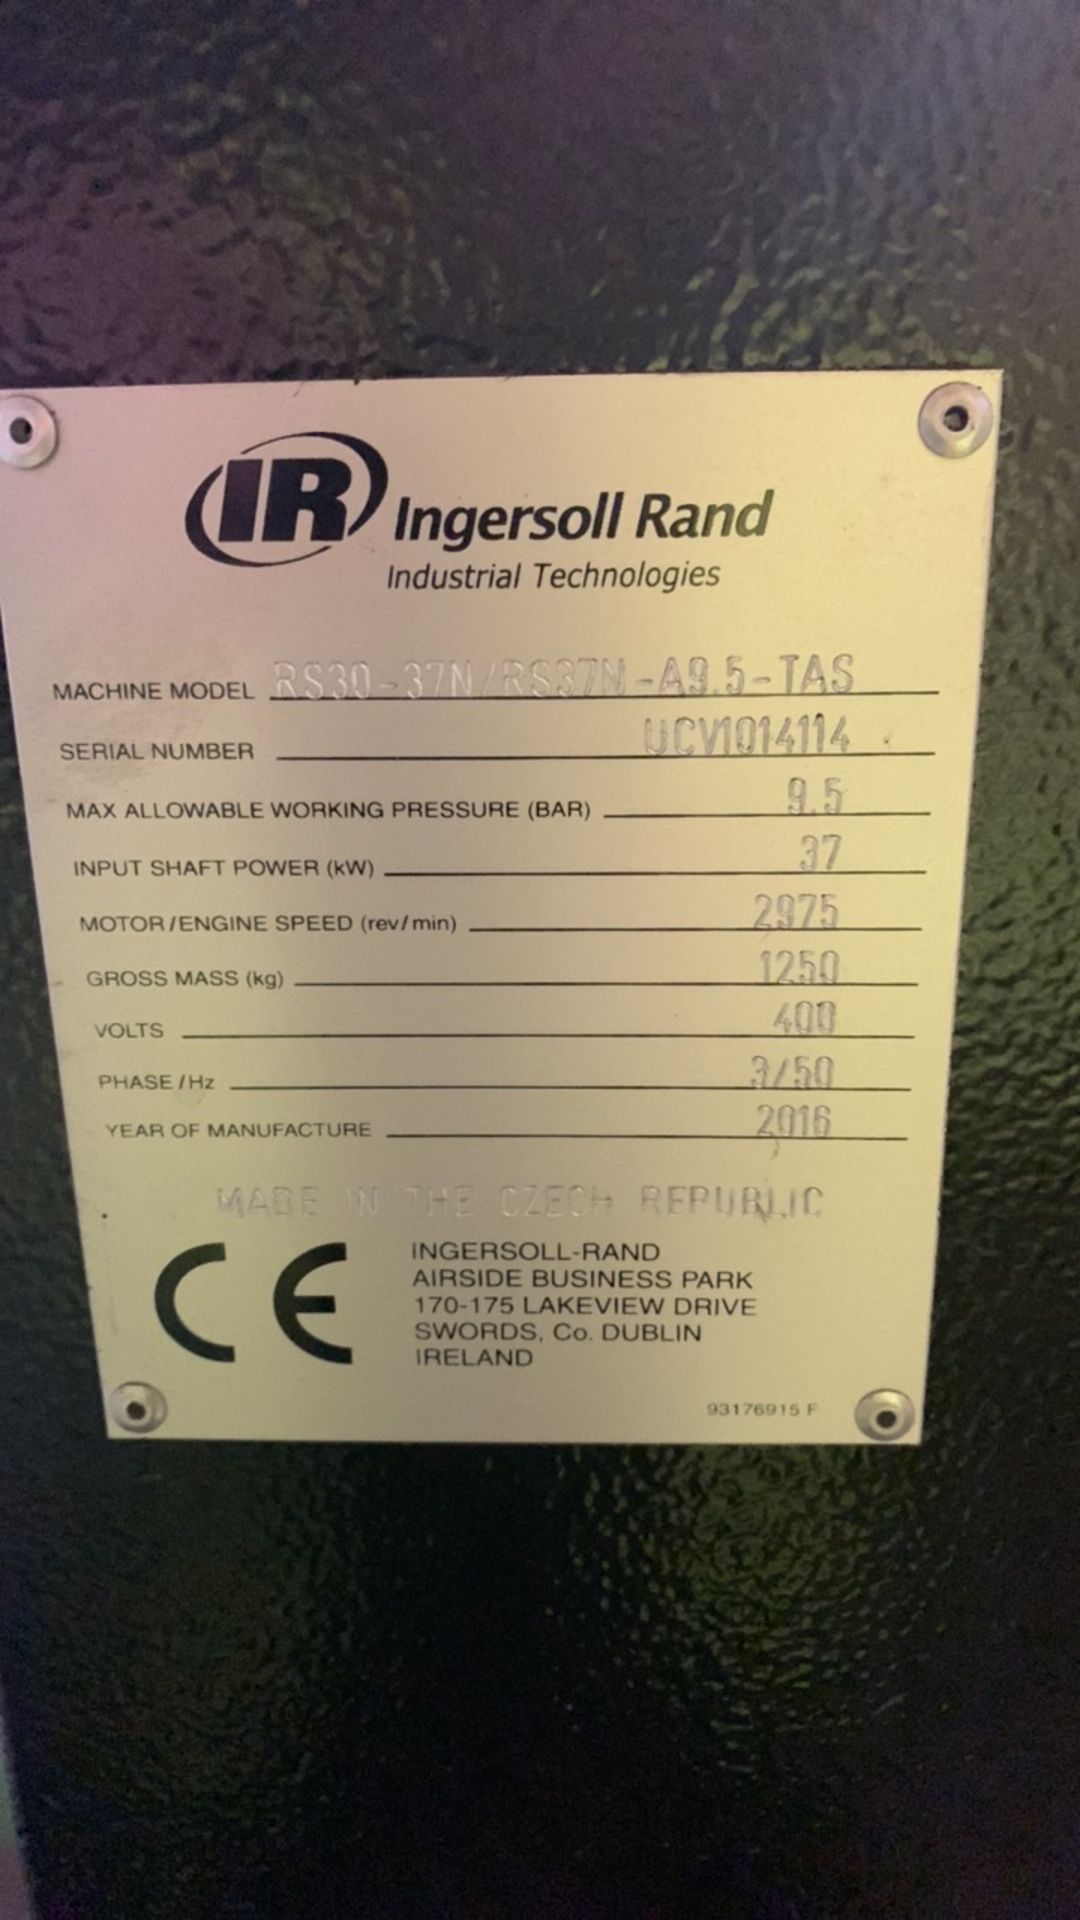 Ingersoll Rand RS30-37N/RS37N-A9 5-TAS 9.5 Bar Screw Compressor (2016) - Image 4 of 4